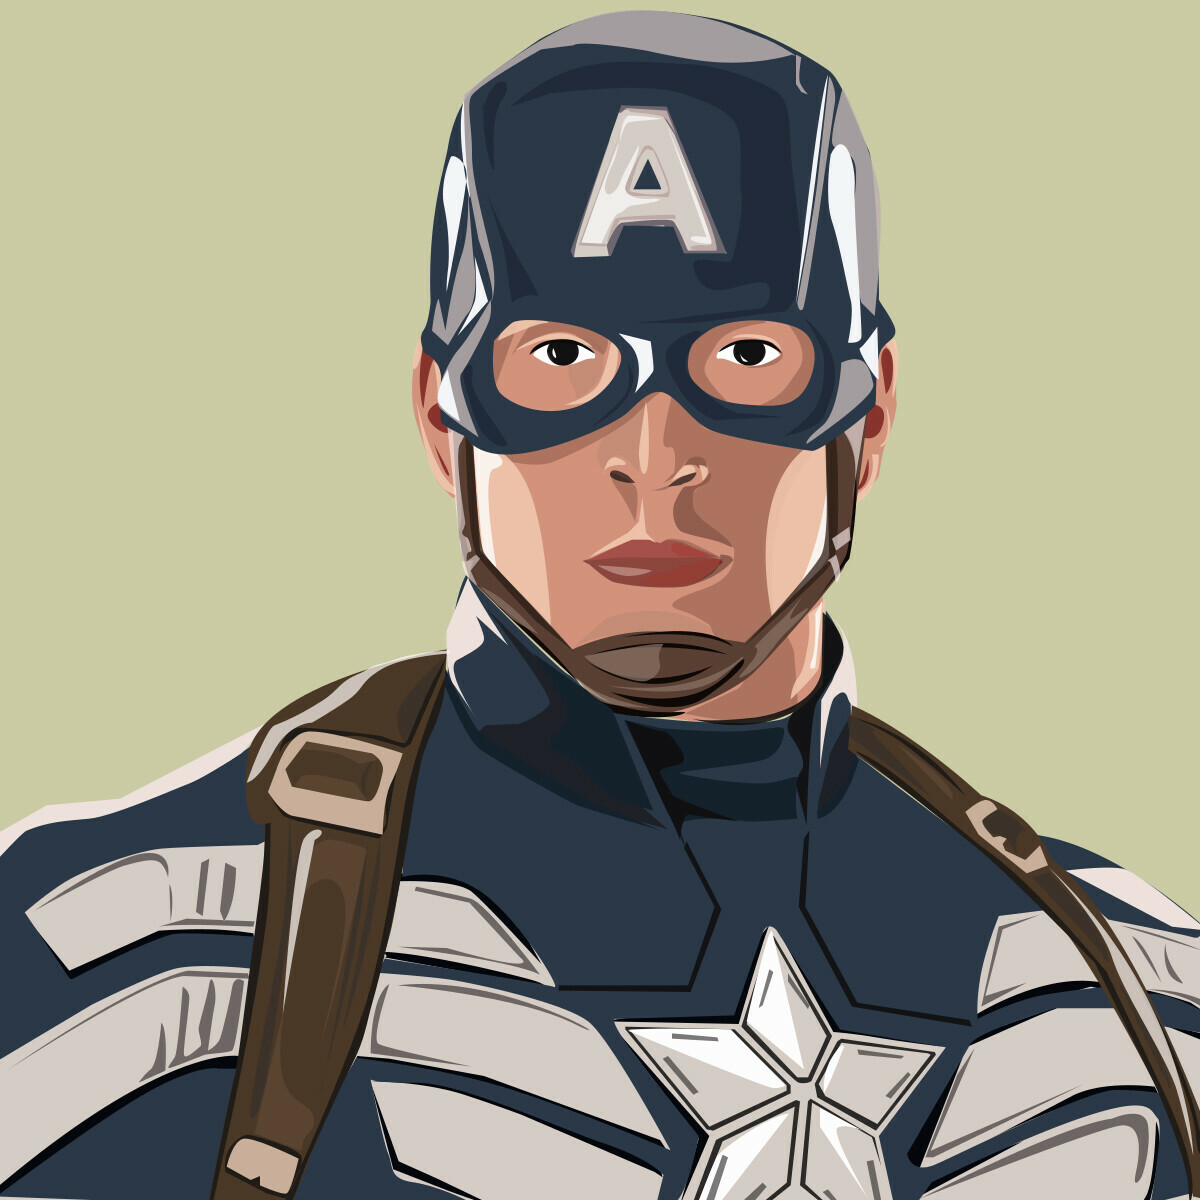 ArtStation - Captain America | Marvel Comics |Photoshop | Digital ...